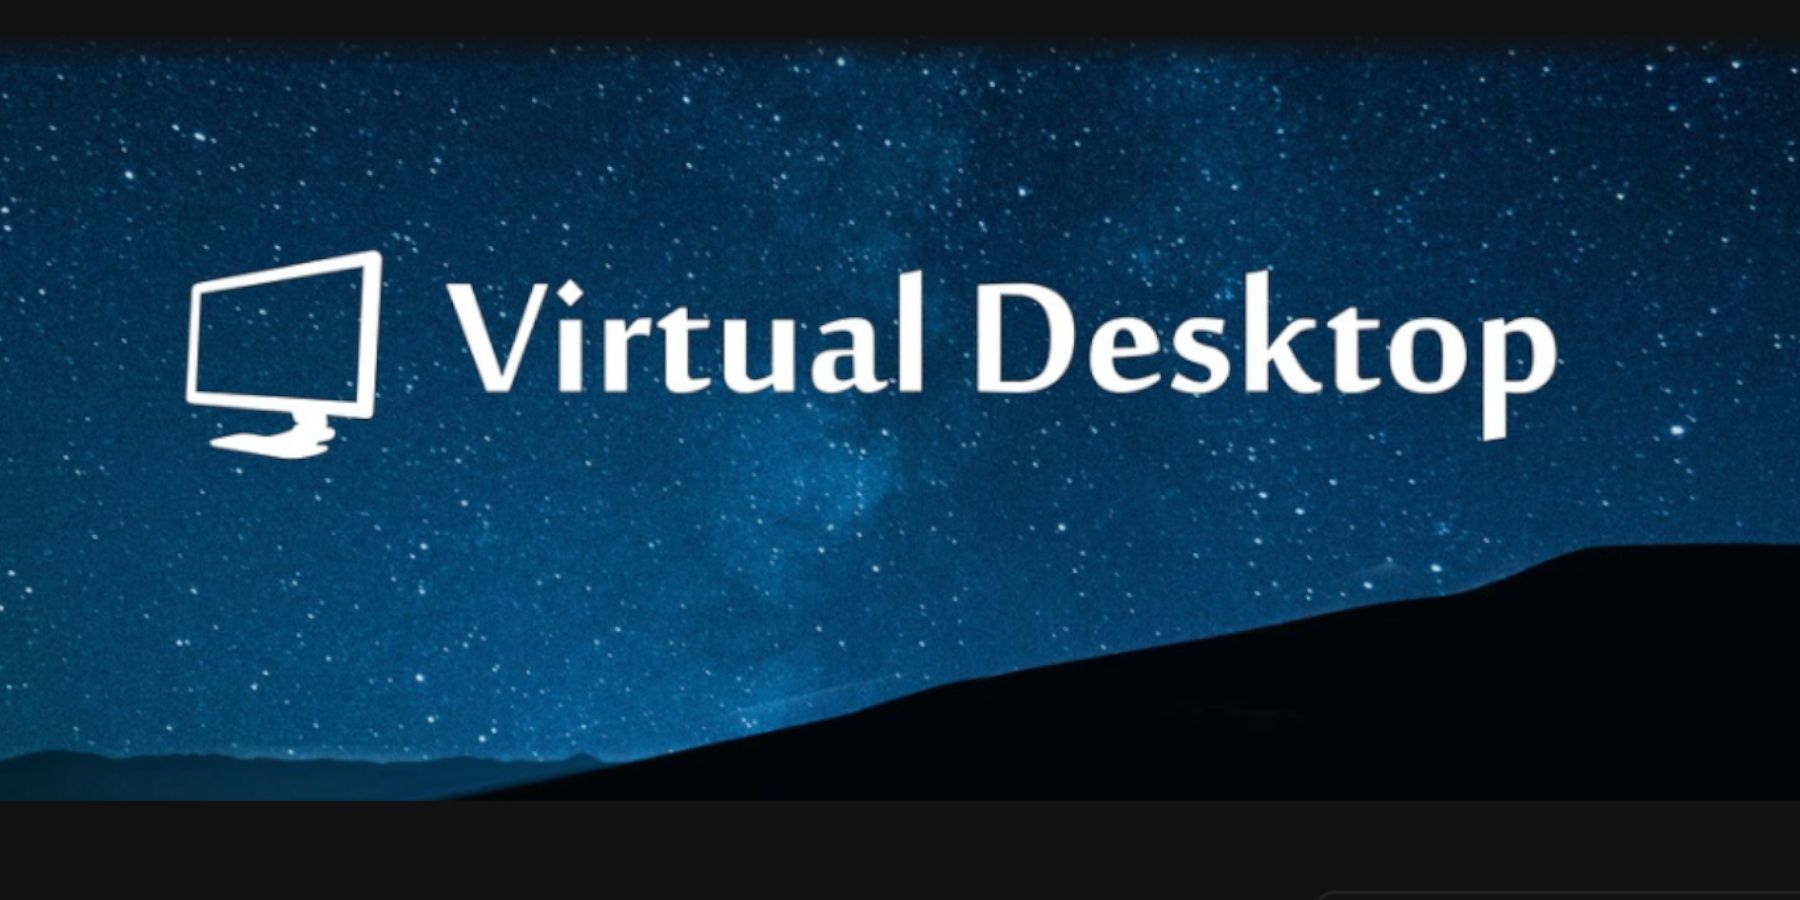 Virtual Desktop logo